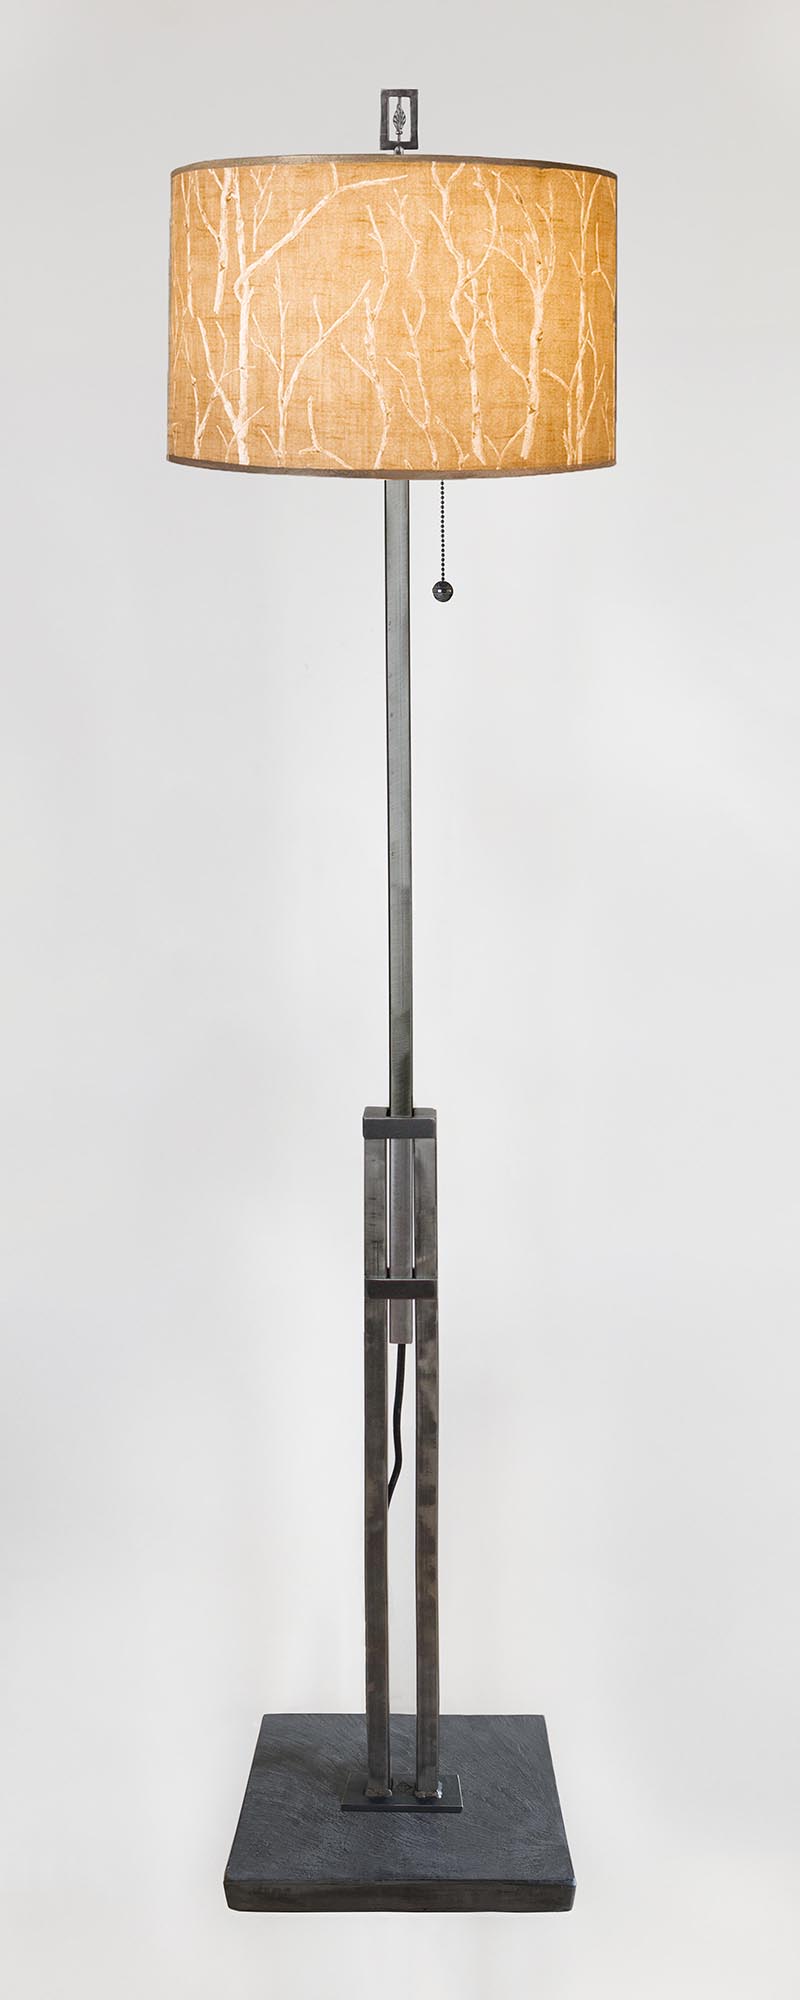 Janna Ugone & Co Floor Lamps Adjustable-Height Steel Floor Lamp with Large Drum Shade in Twigs